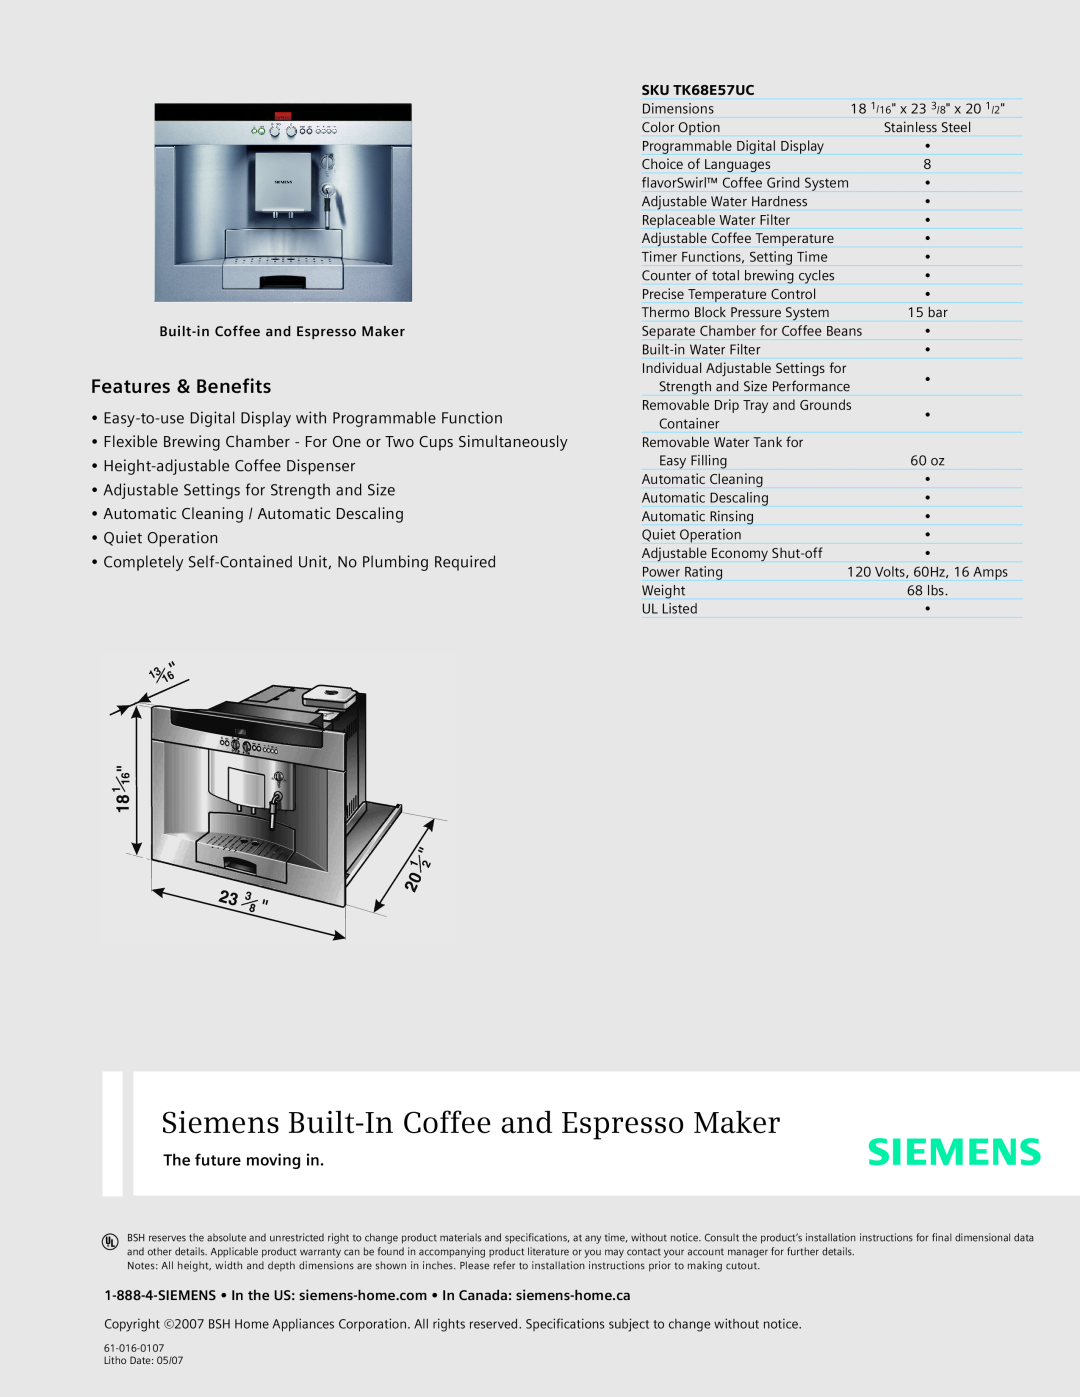 Siemens SKU TK68E57UC specifications Siemens Built-In Coffee and Espresso Maker, Features & Benefits, Quiet Operation 